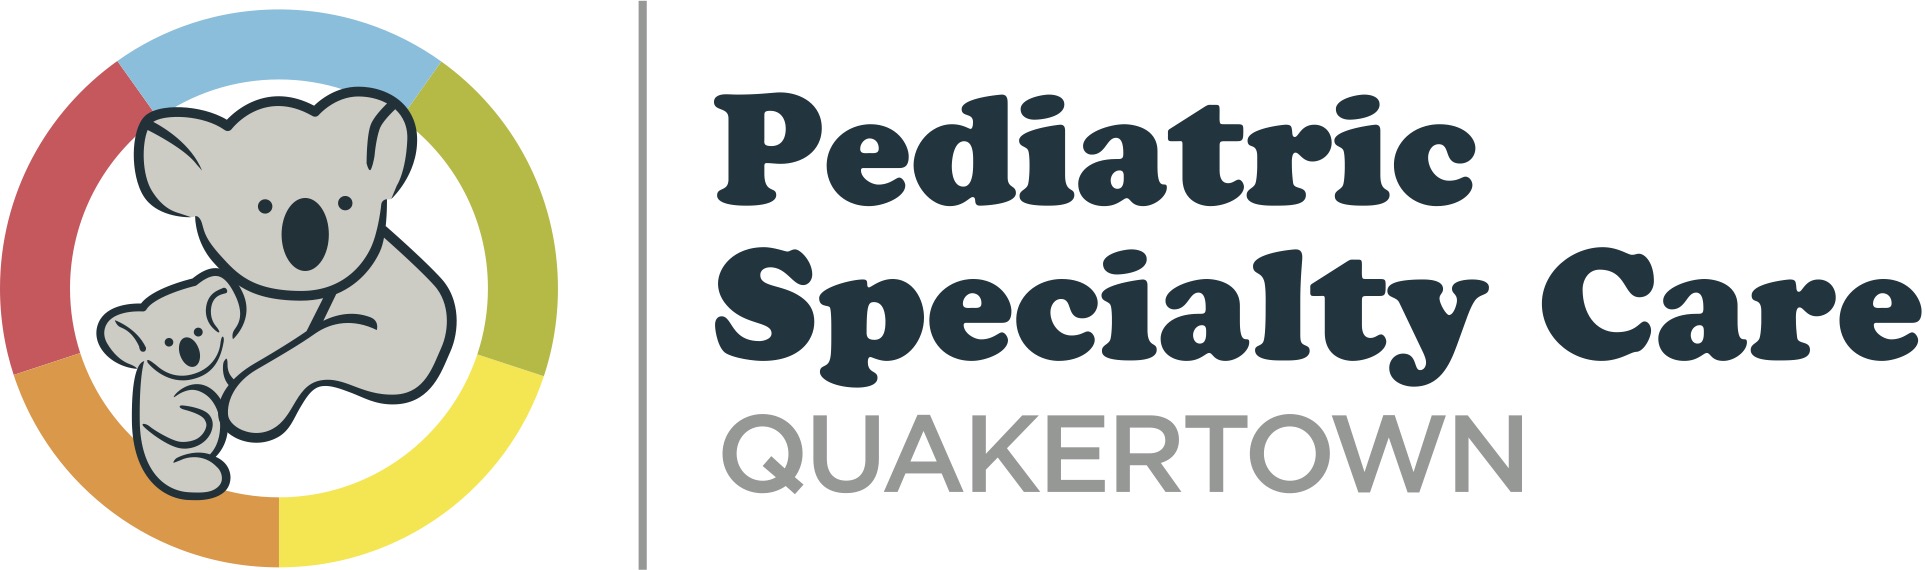 Quakertown, PA - Pediatric Specialty Care | Location logo